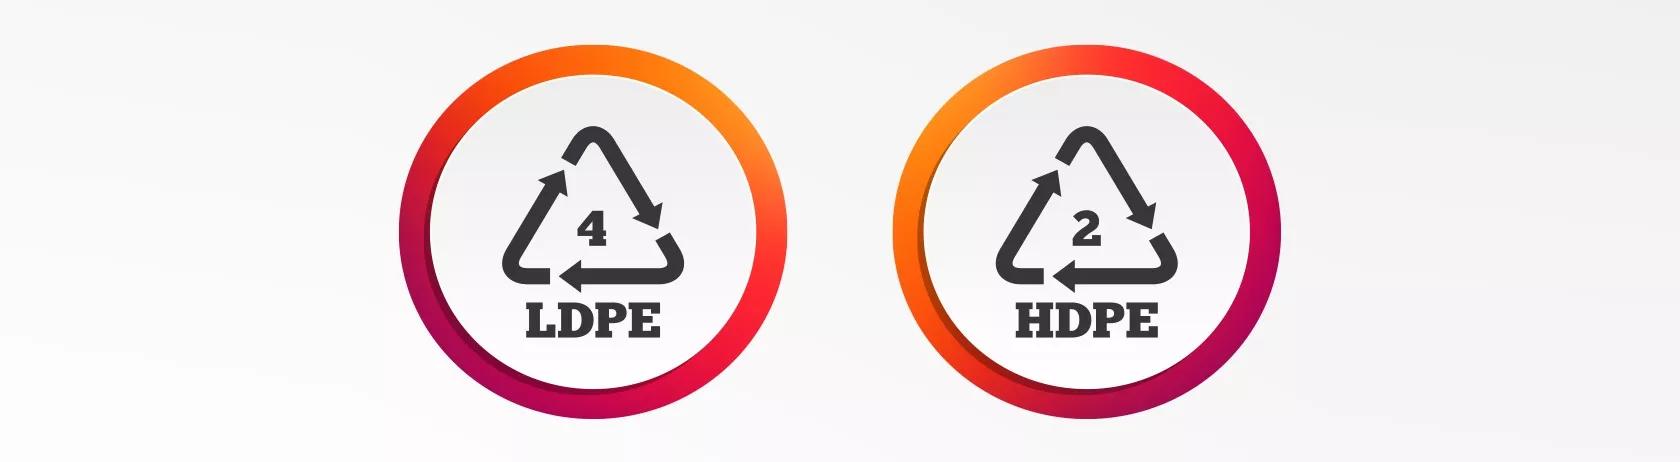 LDPE and HDPE symbols